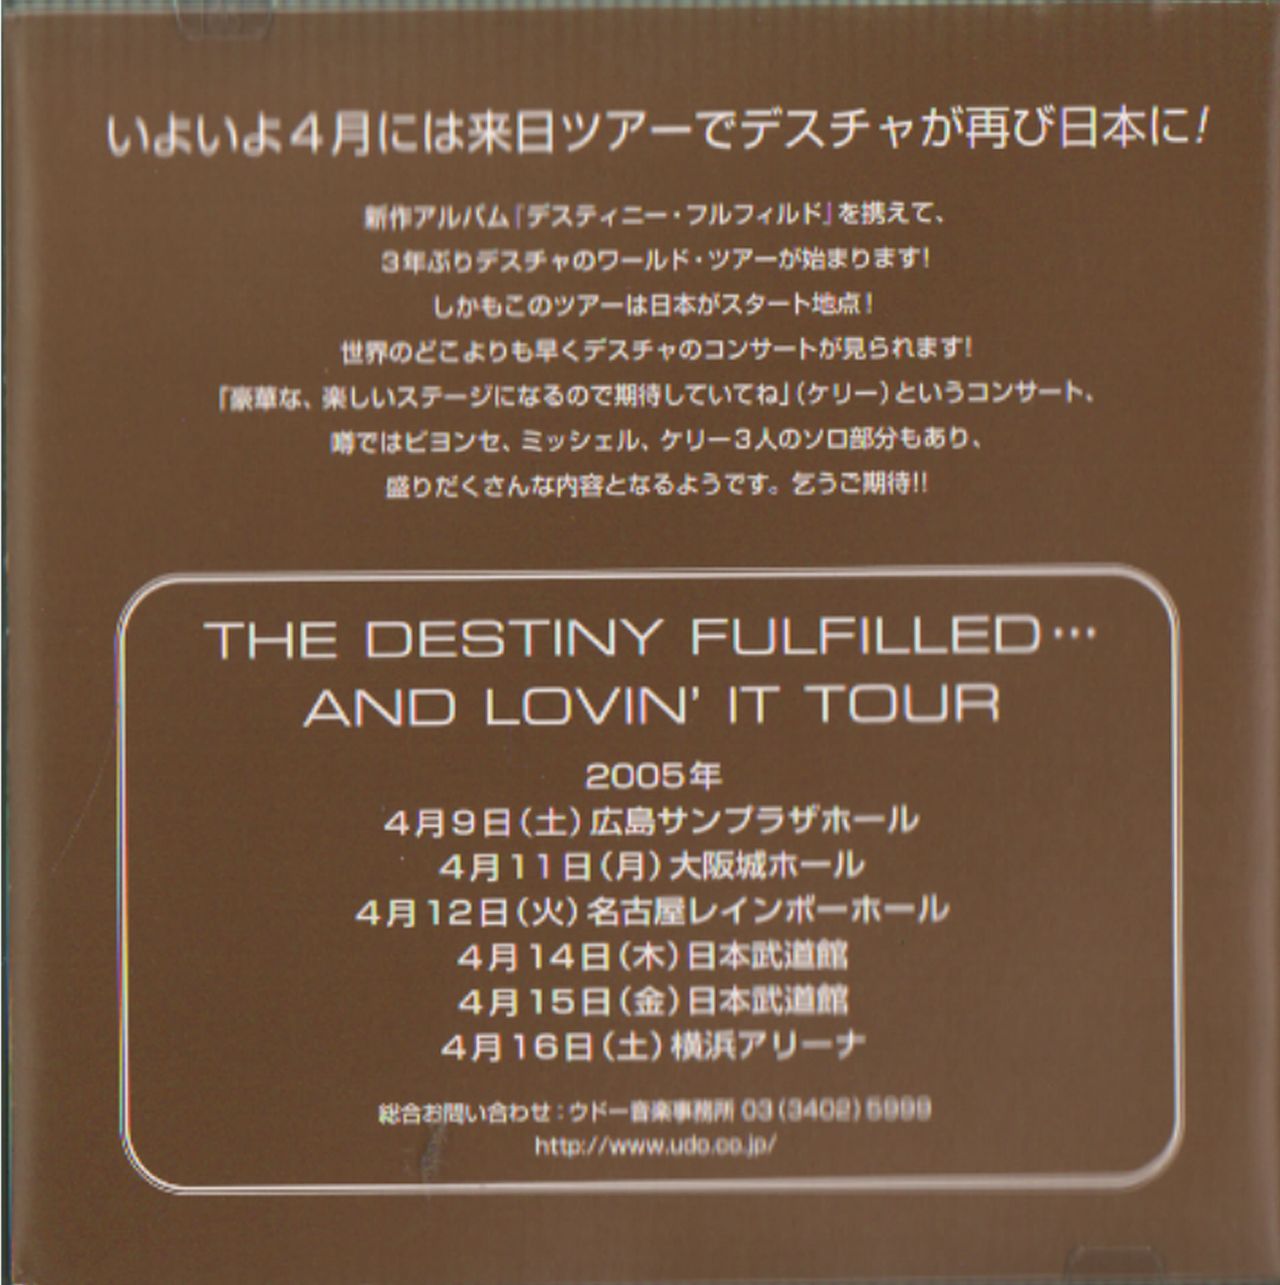 Destiny's Child - Love Destiny JAPAN CD W/OBI SICP-1909 #105-4